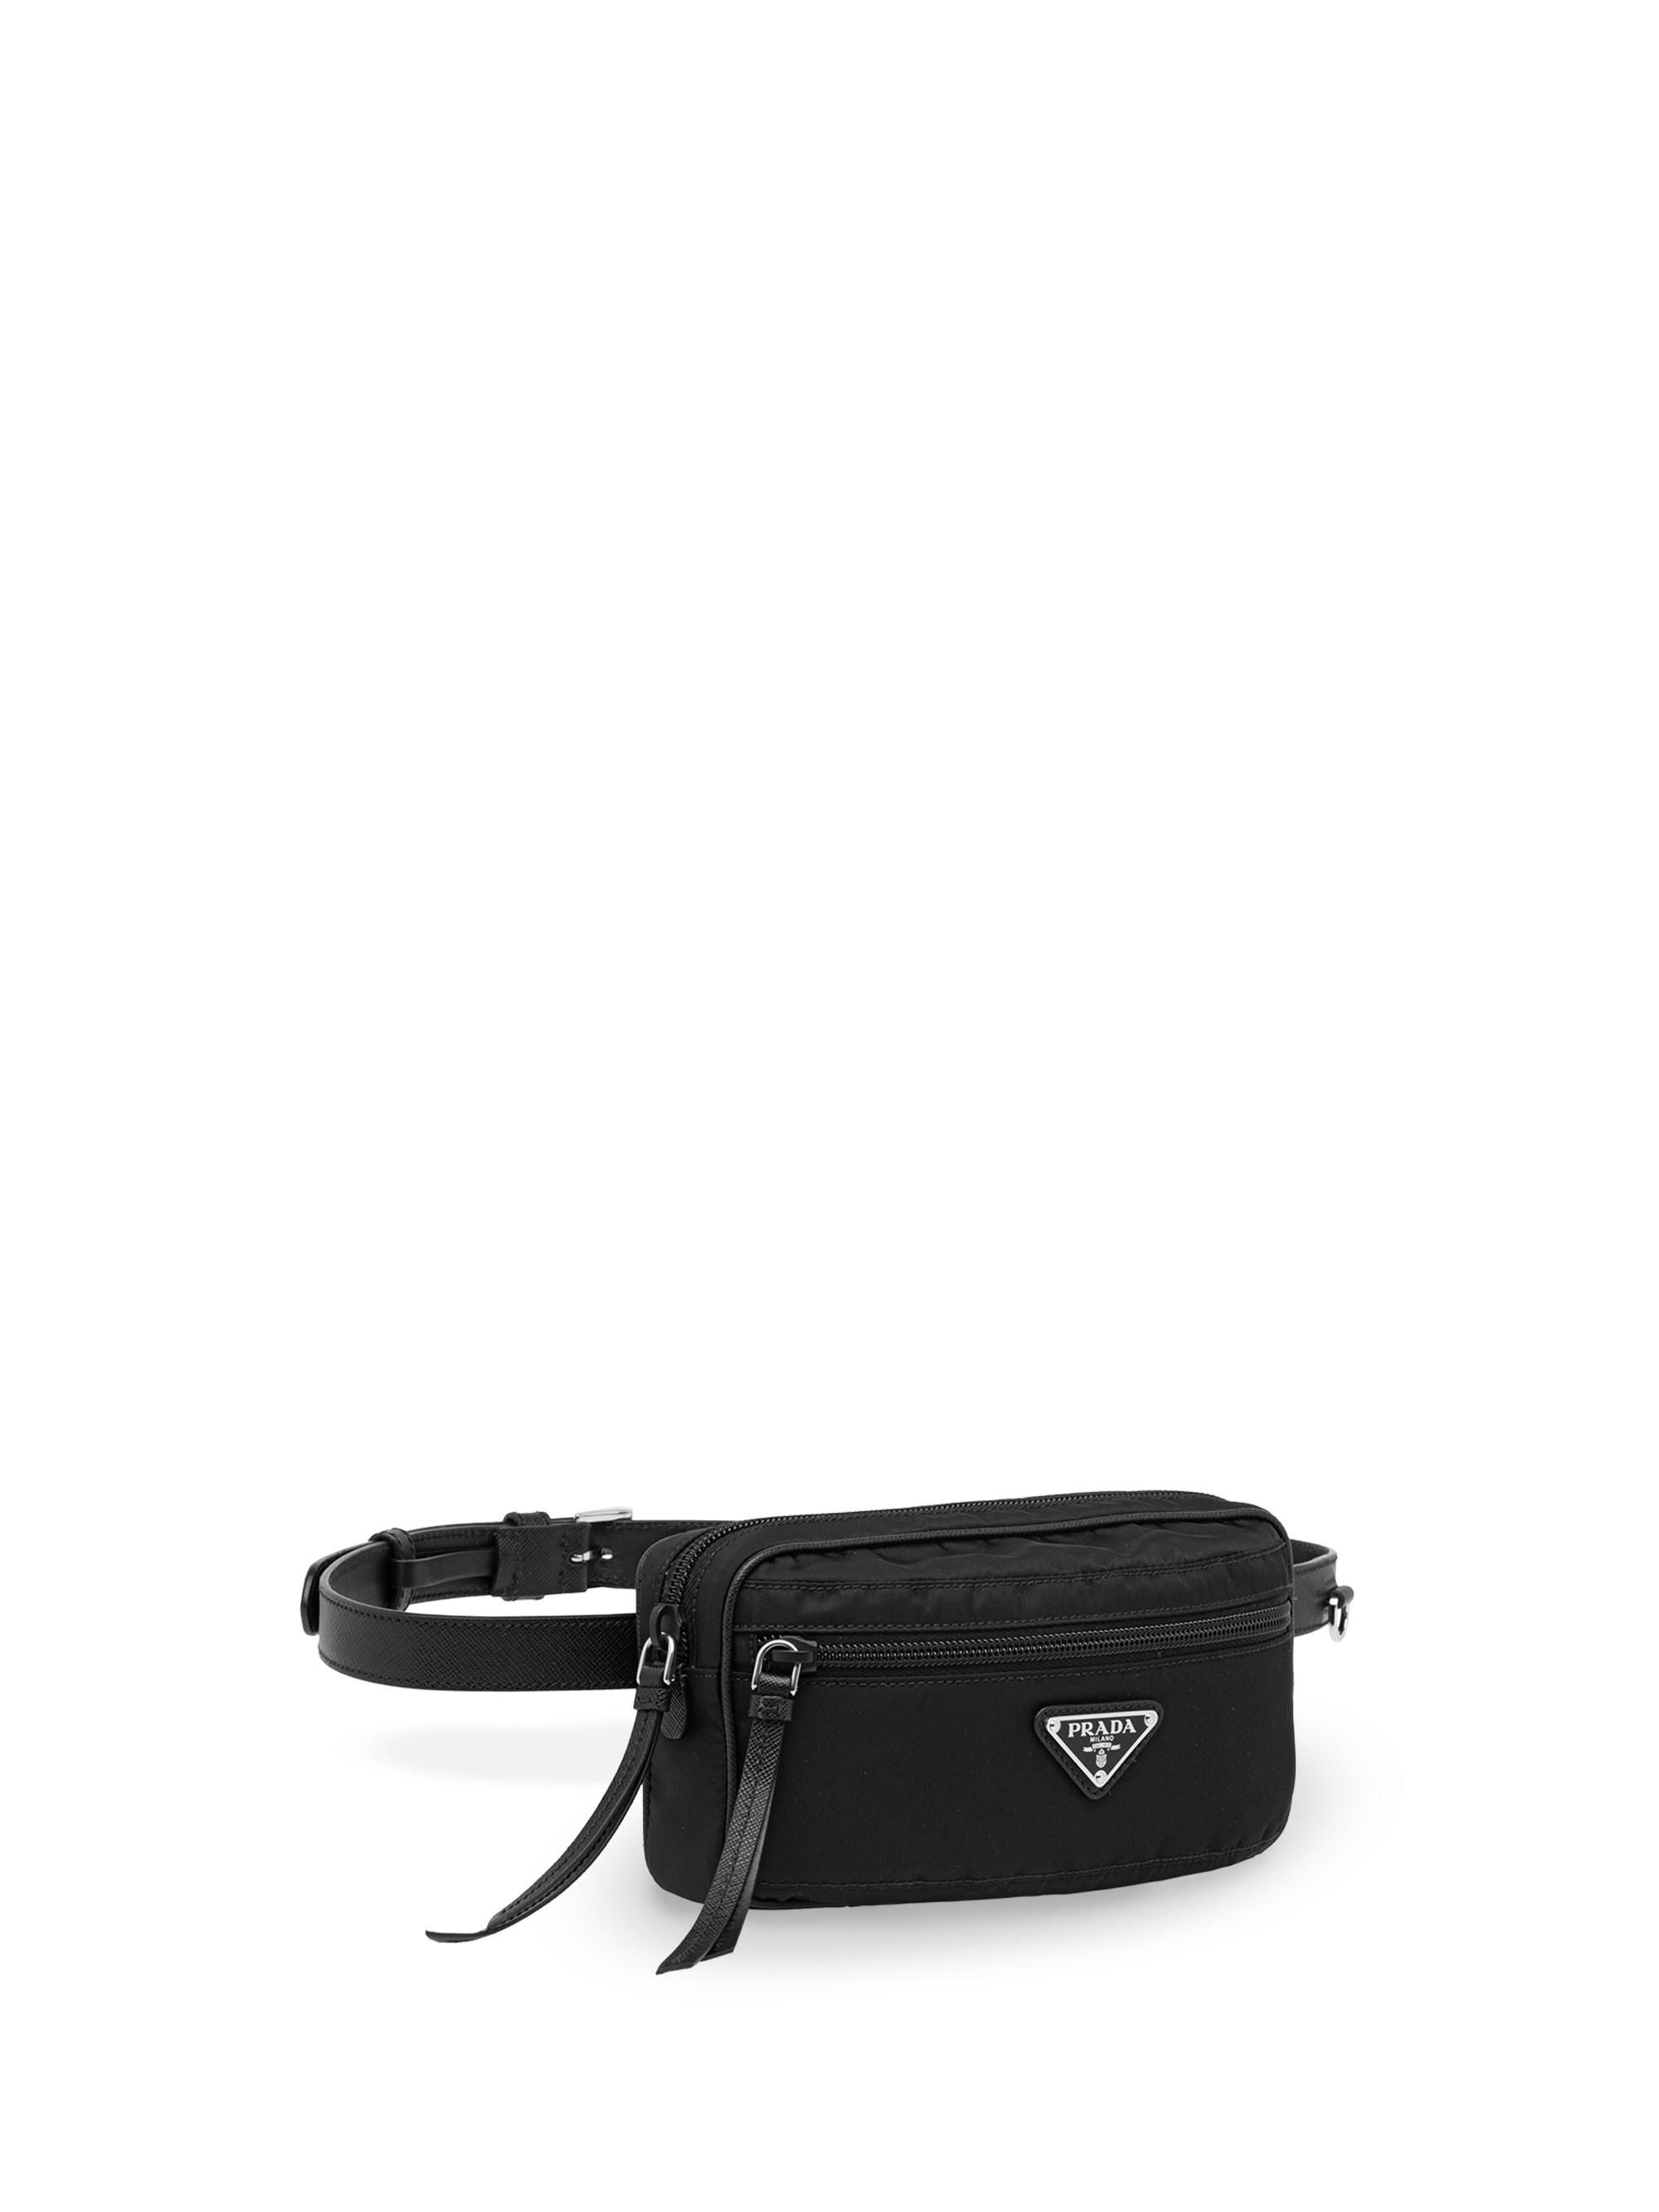 Prada Synthetic Nylon Belt Bag in Nero (Black) | Lyst